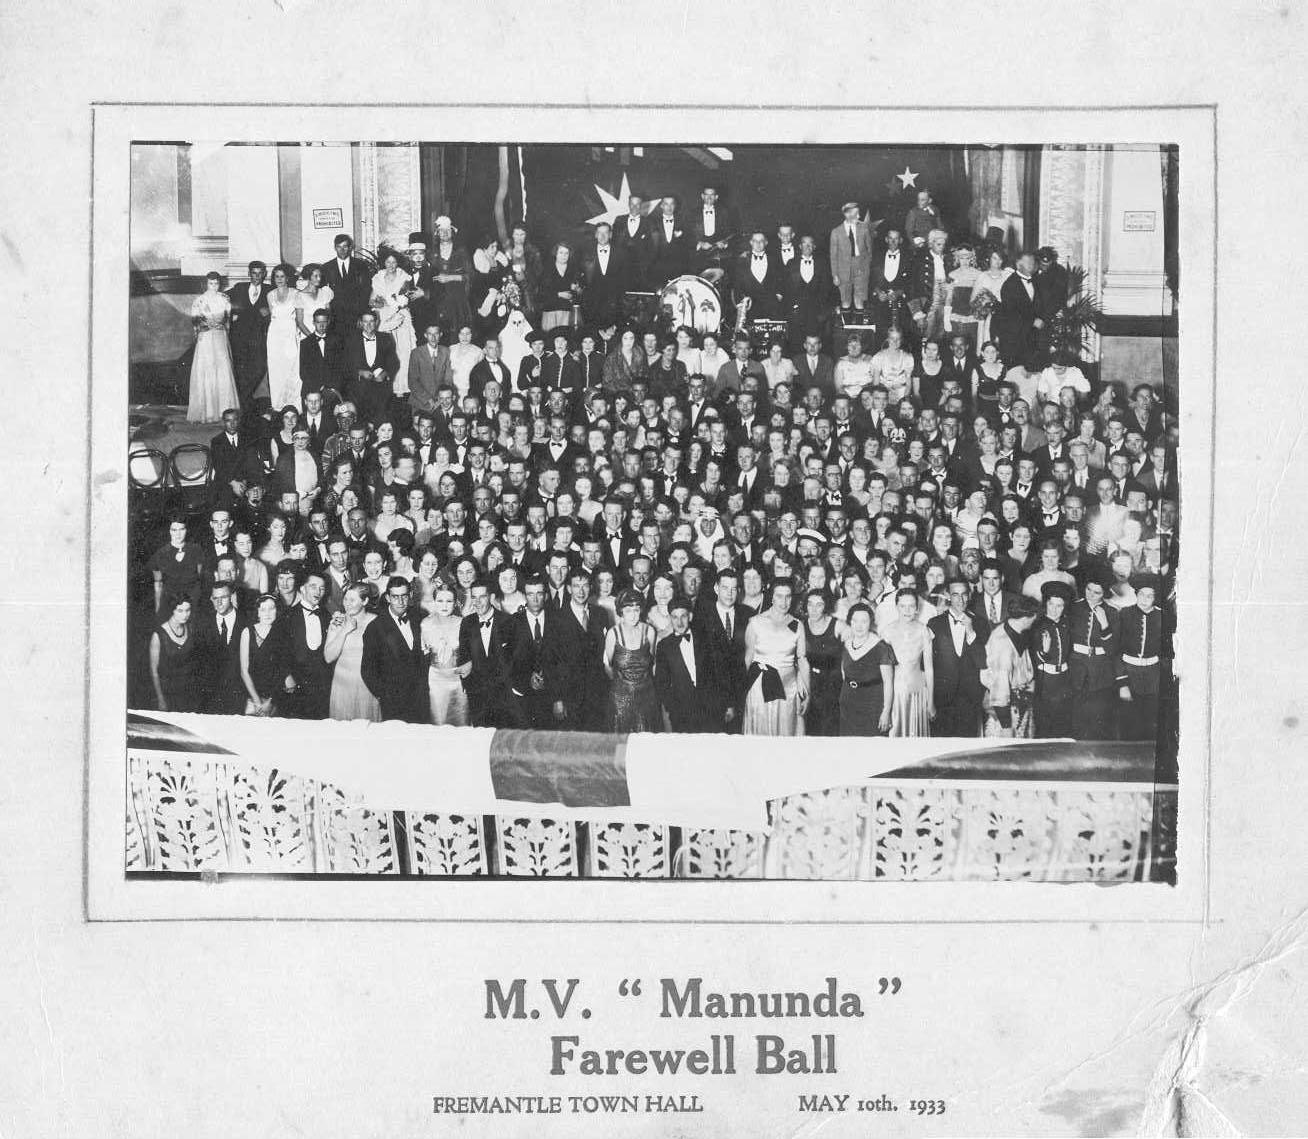 MV Manunda's Fairwell Ball at Fremantle Town Hall, May 10, 1933